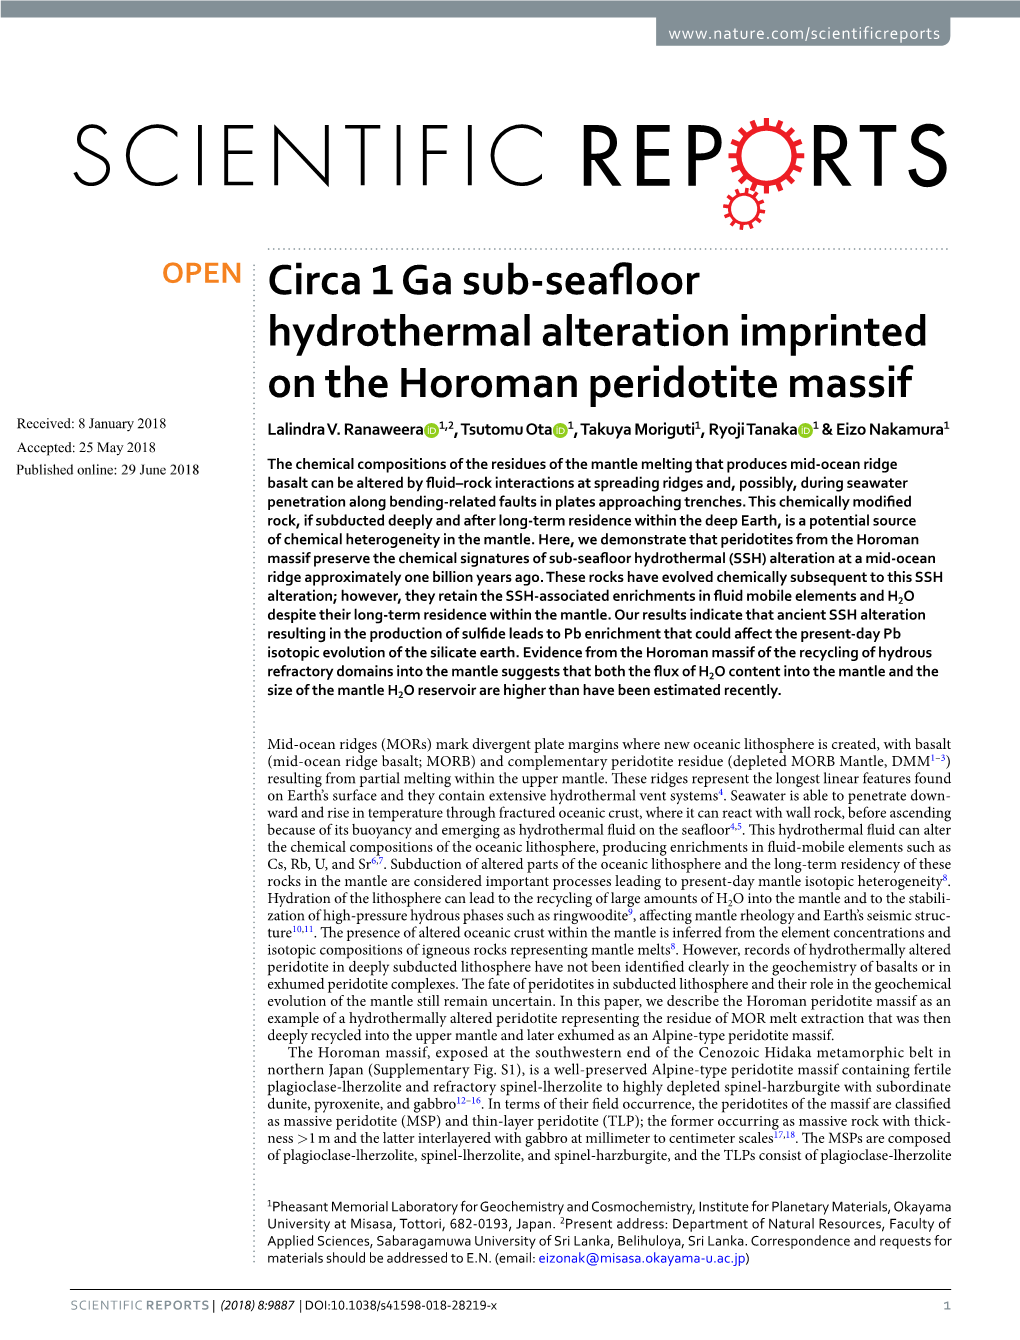 Circa 1 Ga Sub-Seafloor Hydrothermal Alteration Imprinted on The